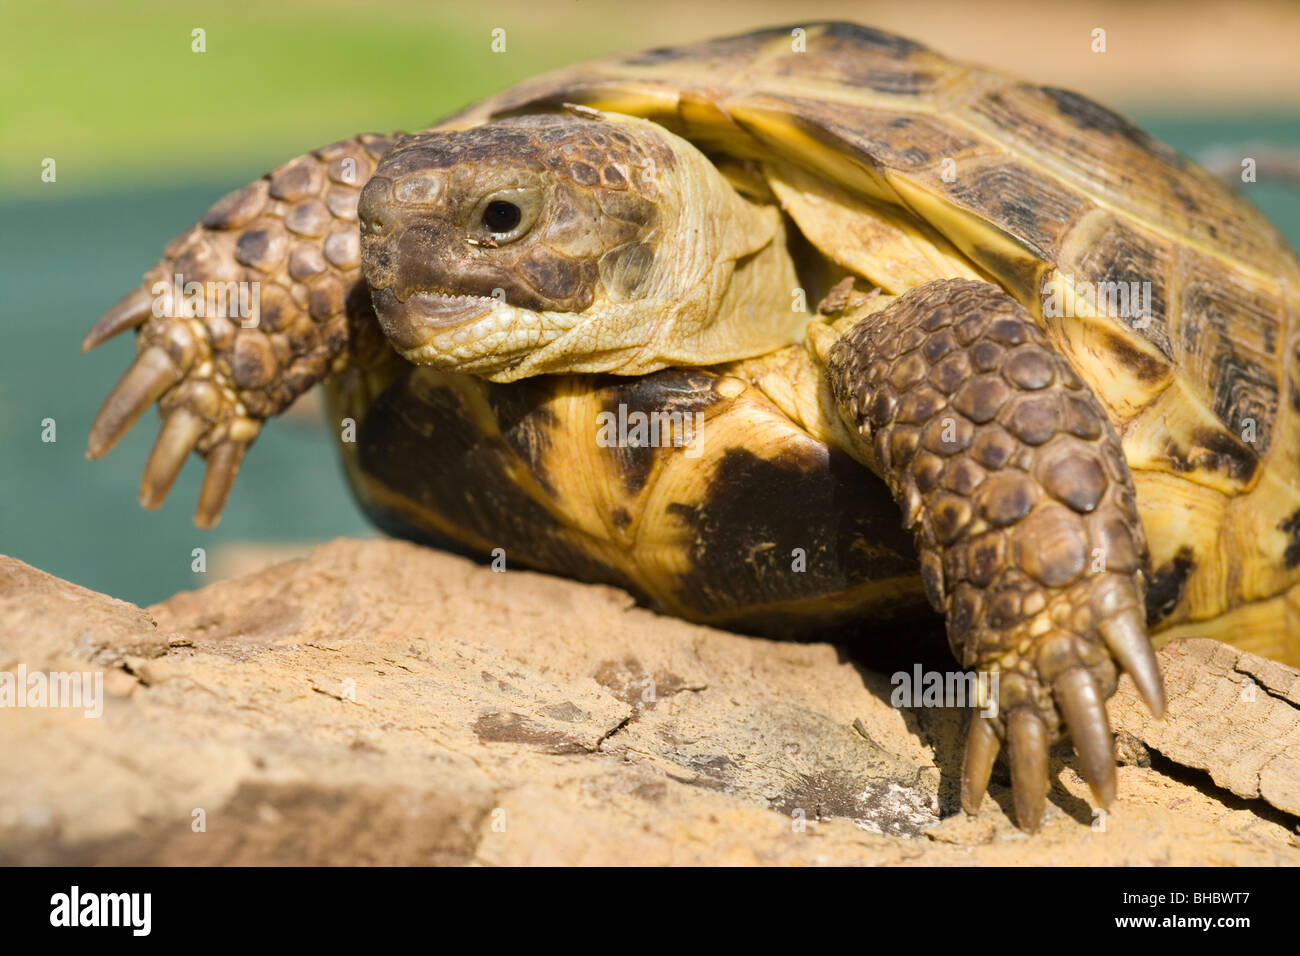 La Horsefield , Ruso o cuatro dedos cada tortuga (Testudo horsfieldi). Distribución; en Asia central, Rusia a Pakistán. Foto de stock